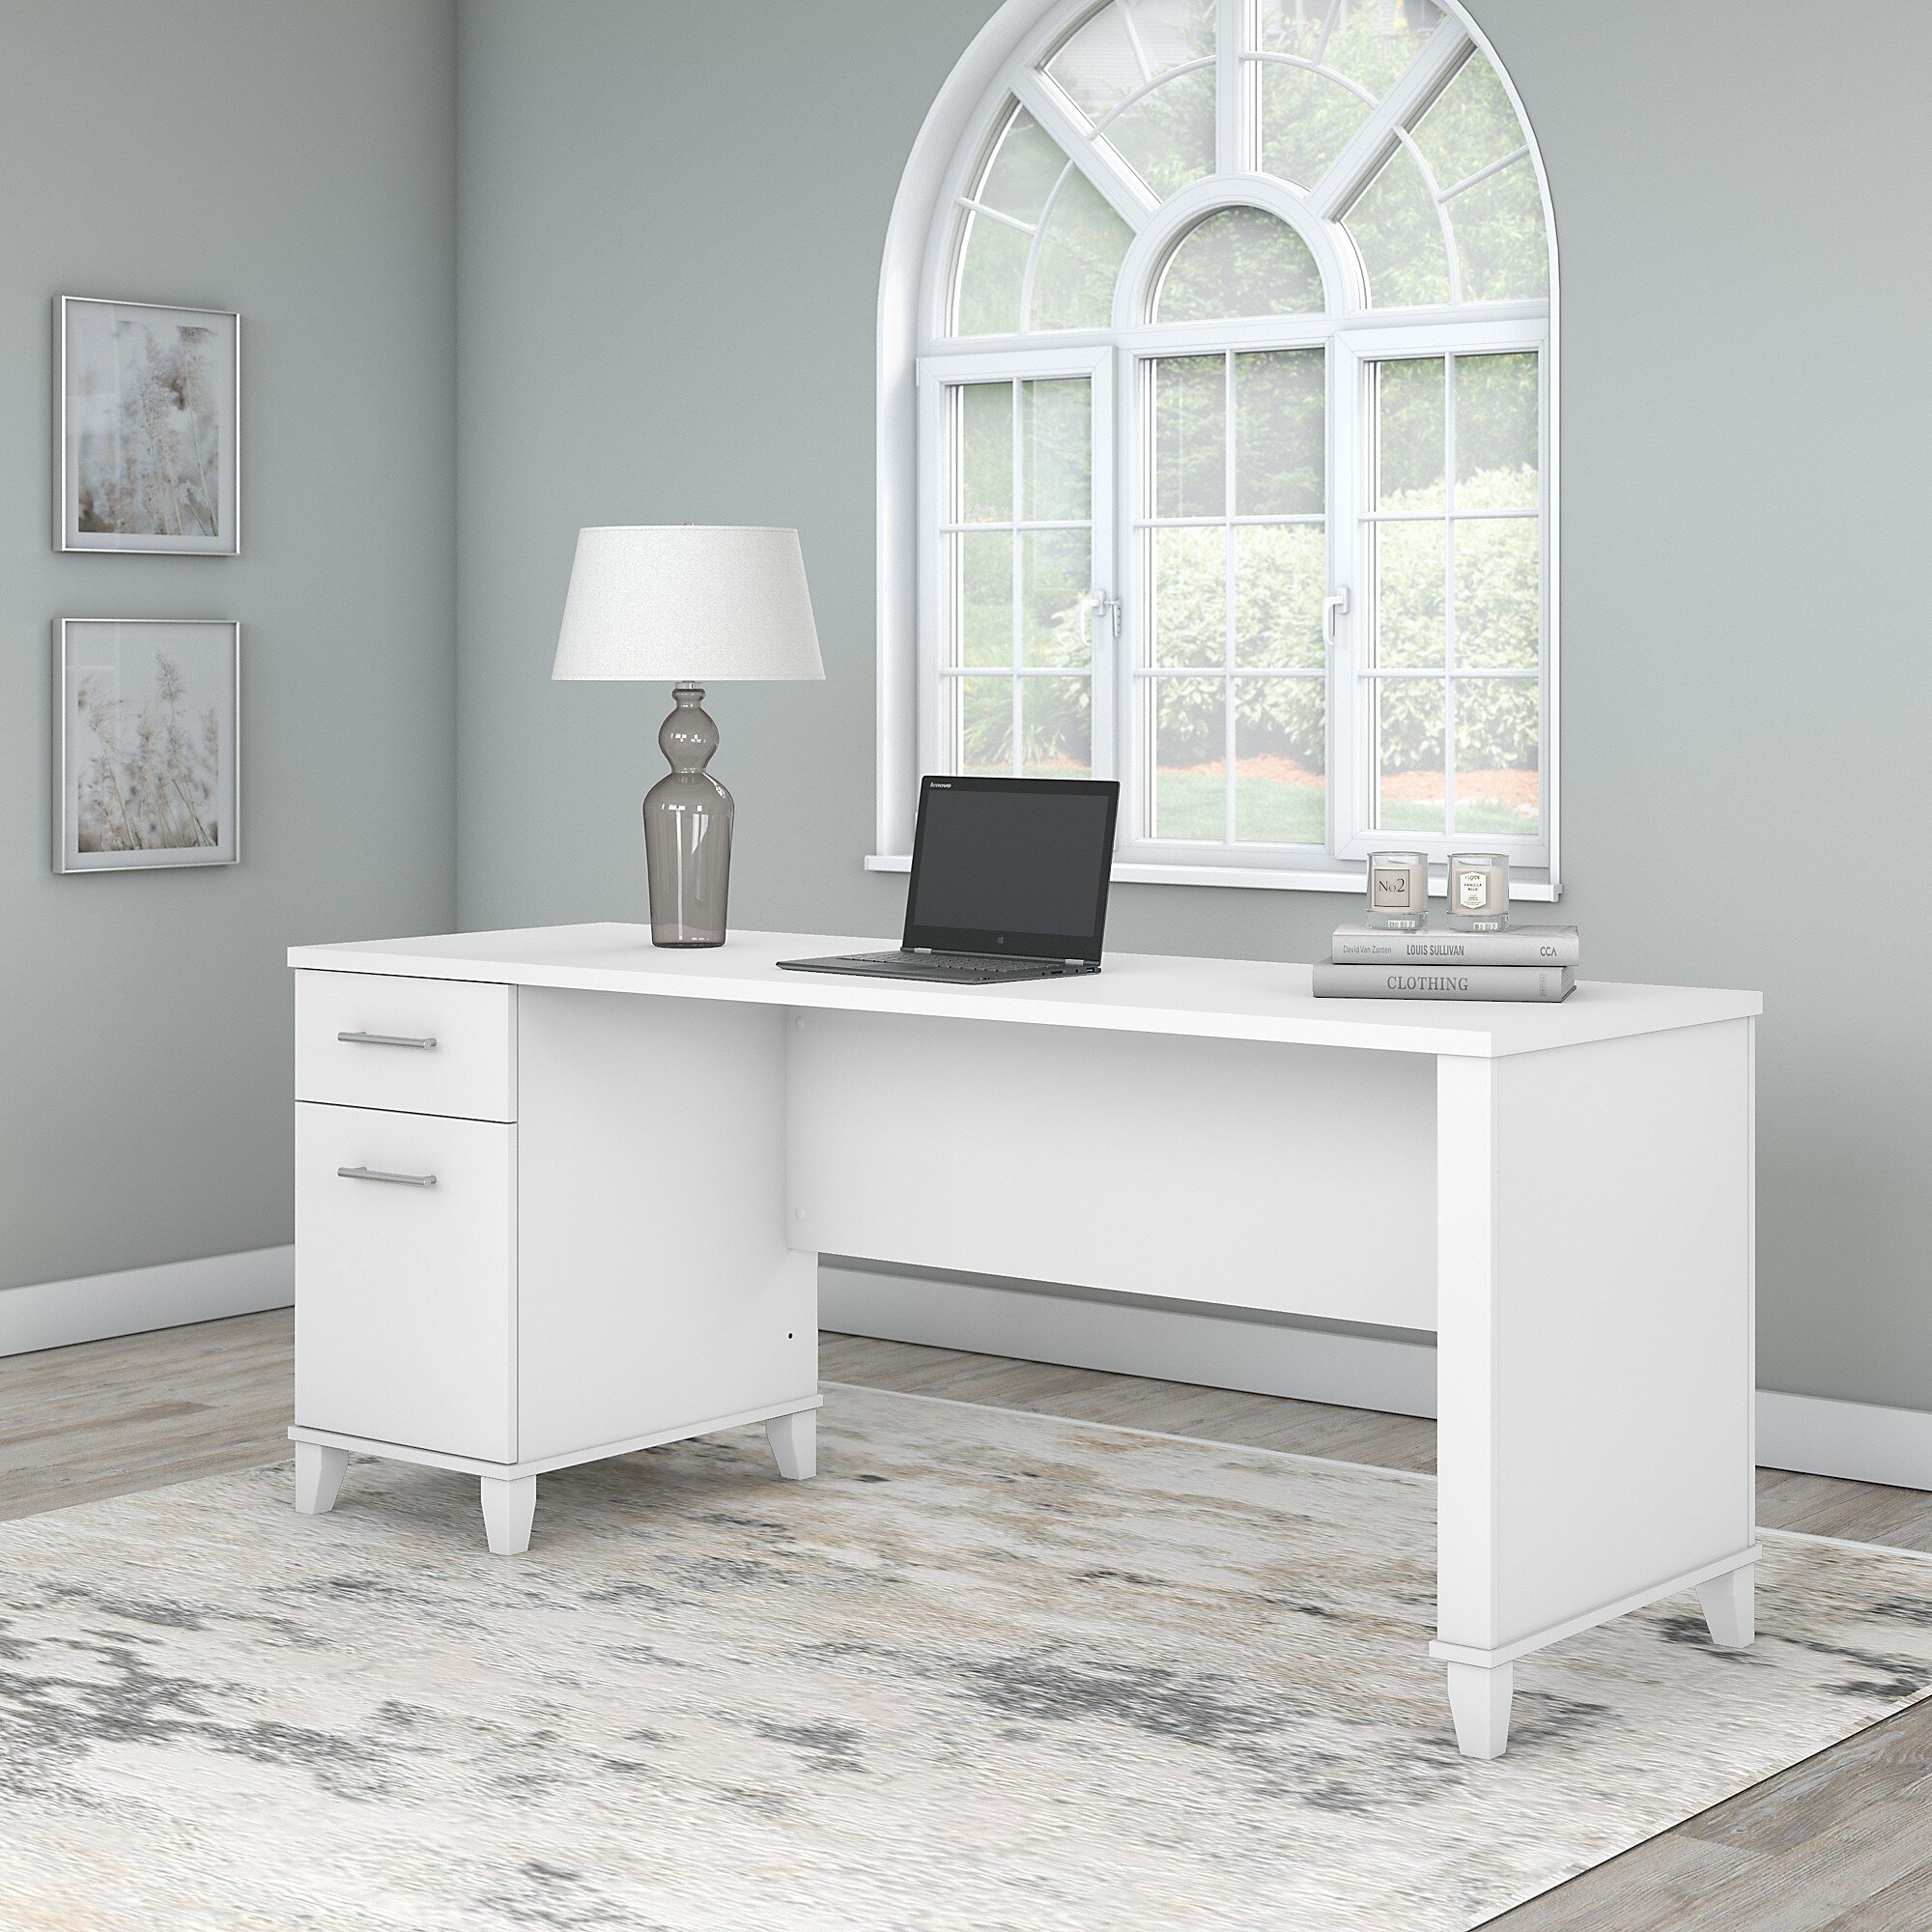 Just white desk table 1 drawer 1 door 73x108x50. Modern office